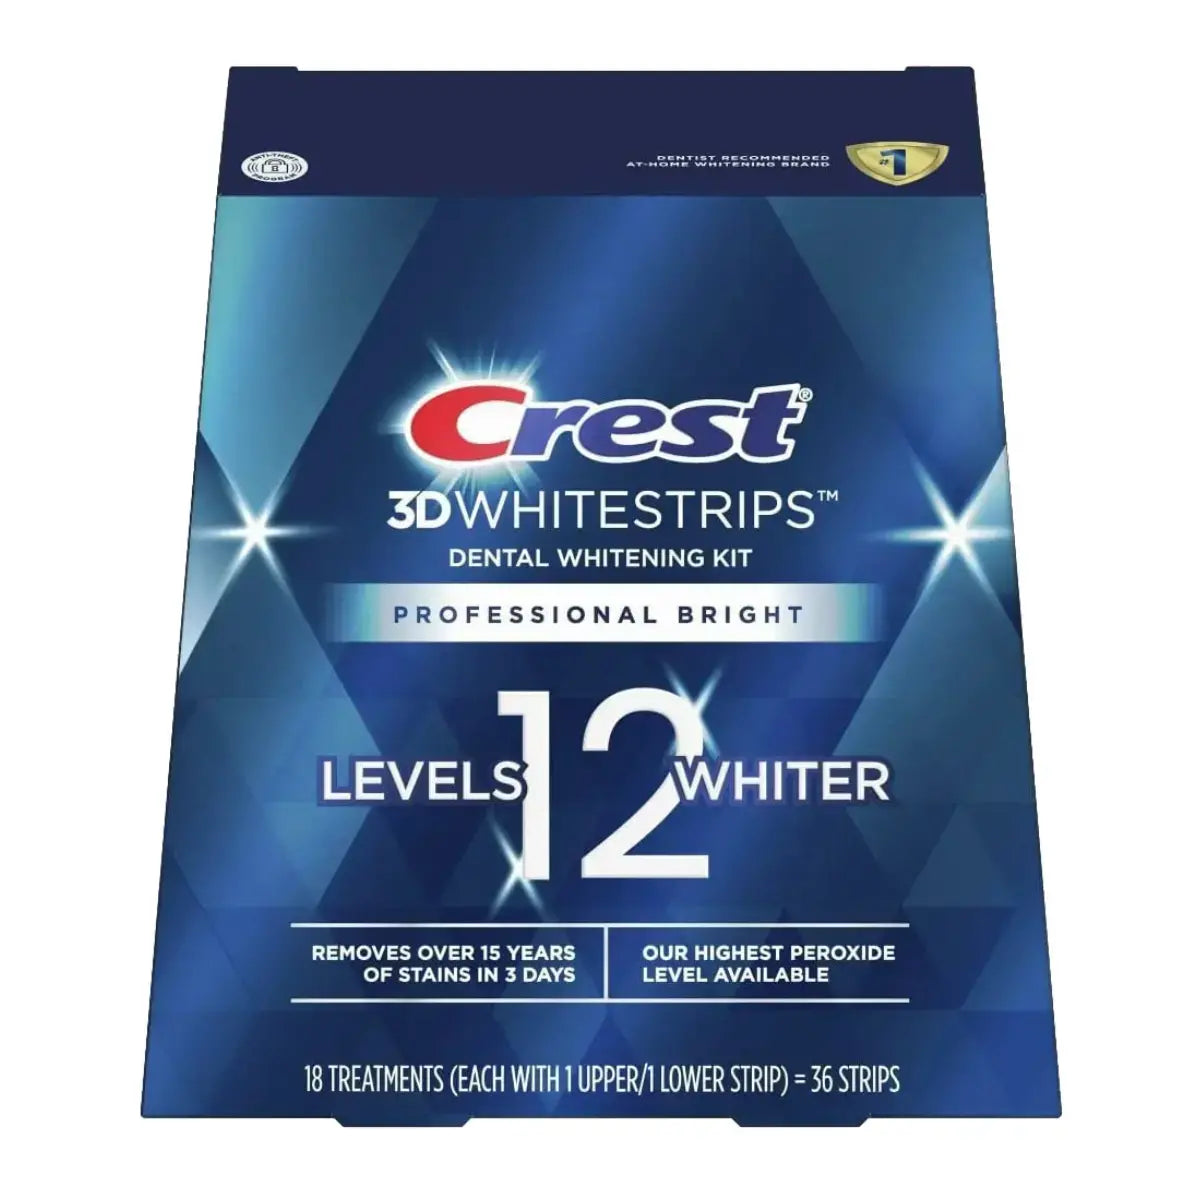 Paski Wybielające Crest 3D Whitestrips Professional Bright 12 Levels Whiter